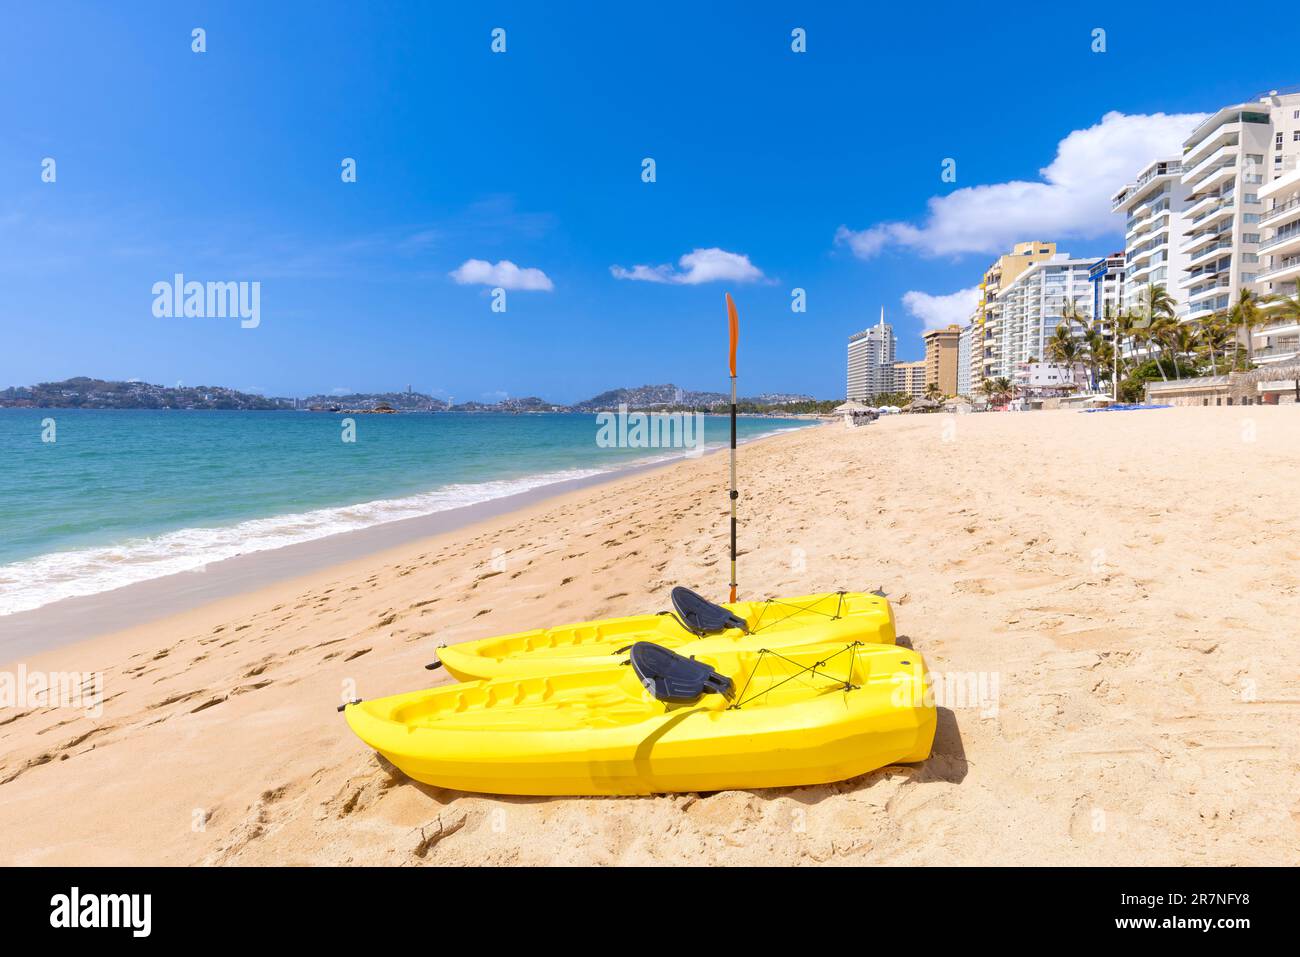 Mexico, Acapulco resort beaches and scenic ocean views near Zona Dorada Golden Beach zone. Stock Photo